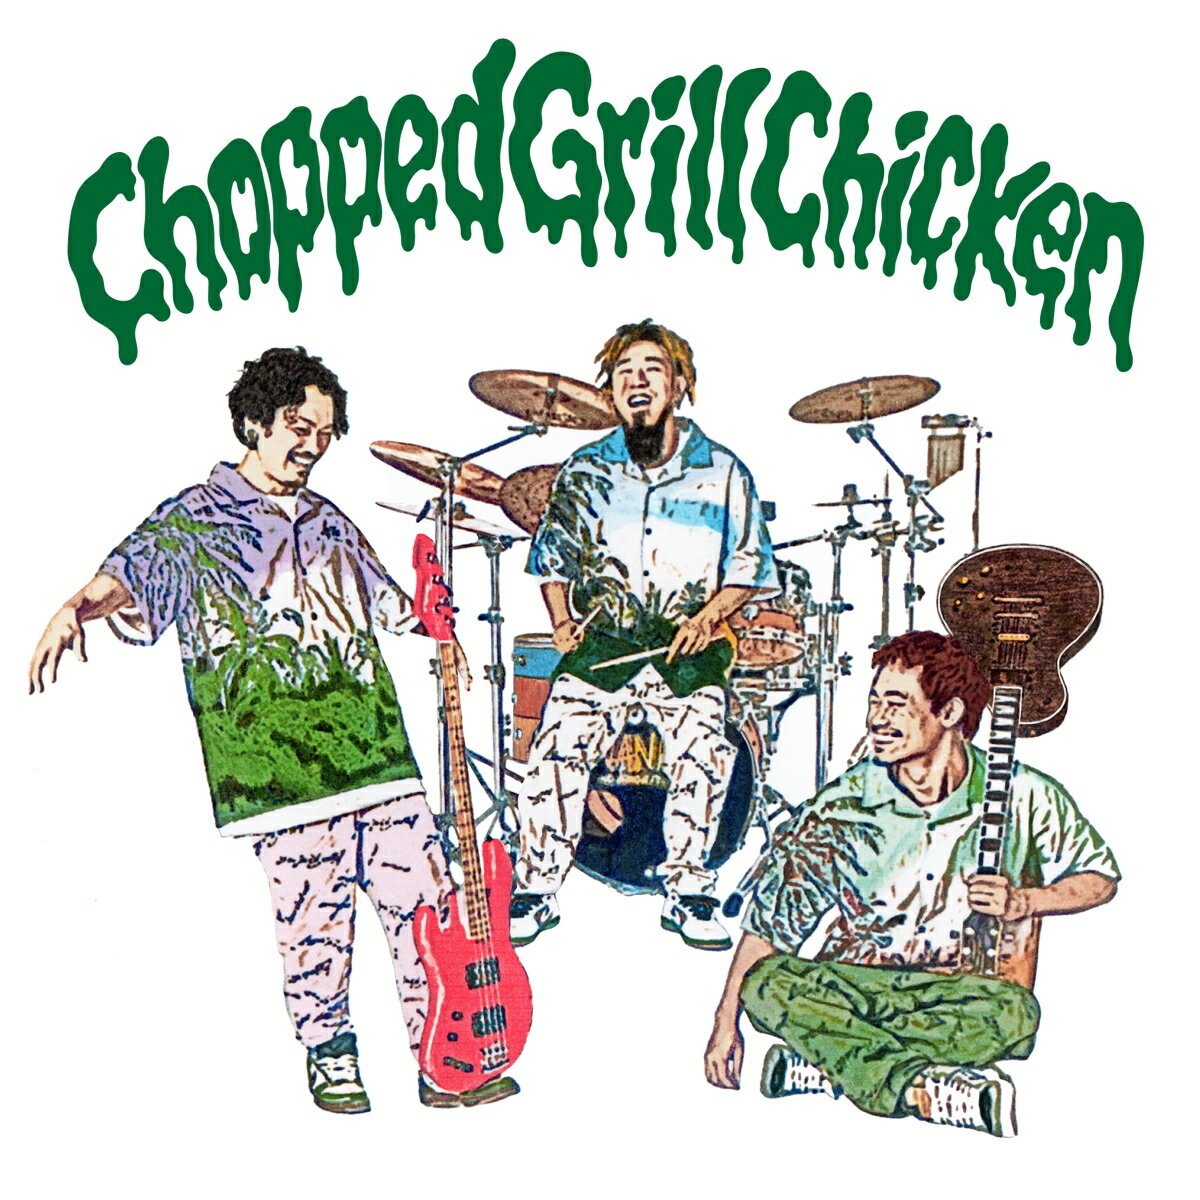 Chopped Grill Chicken (初回限定盤 CD＋DVD) [ WANIMA ]